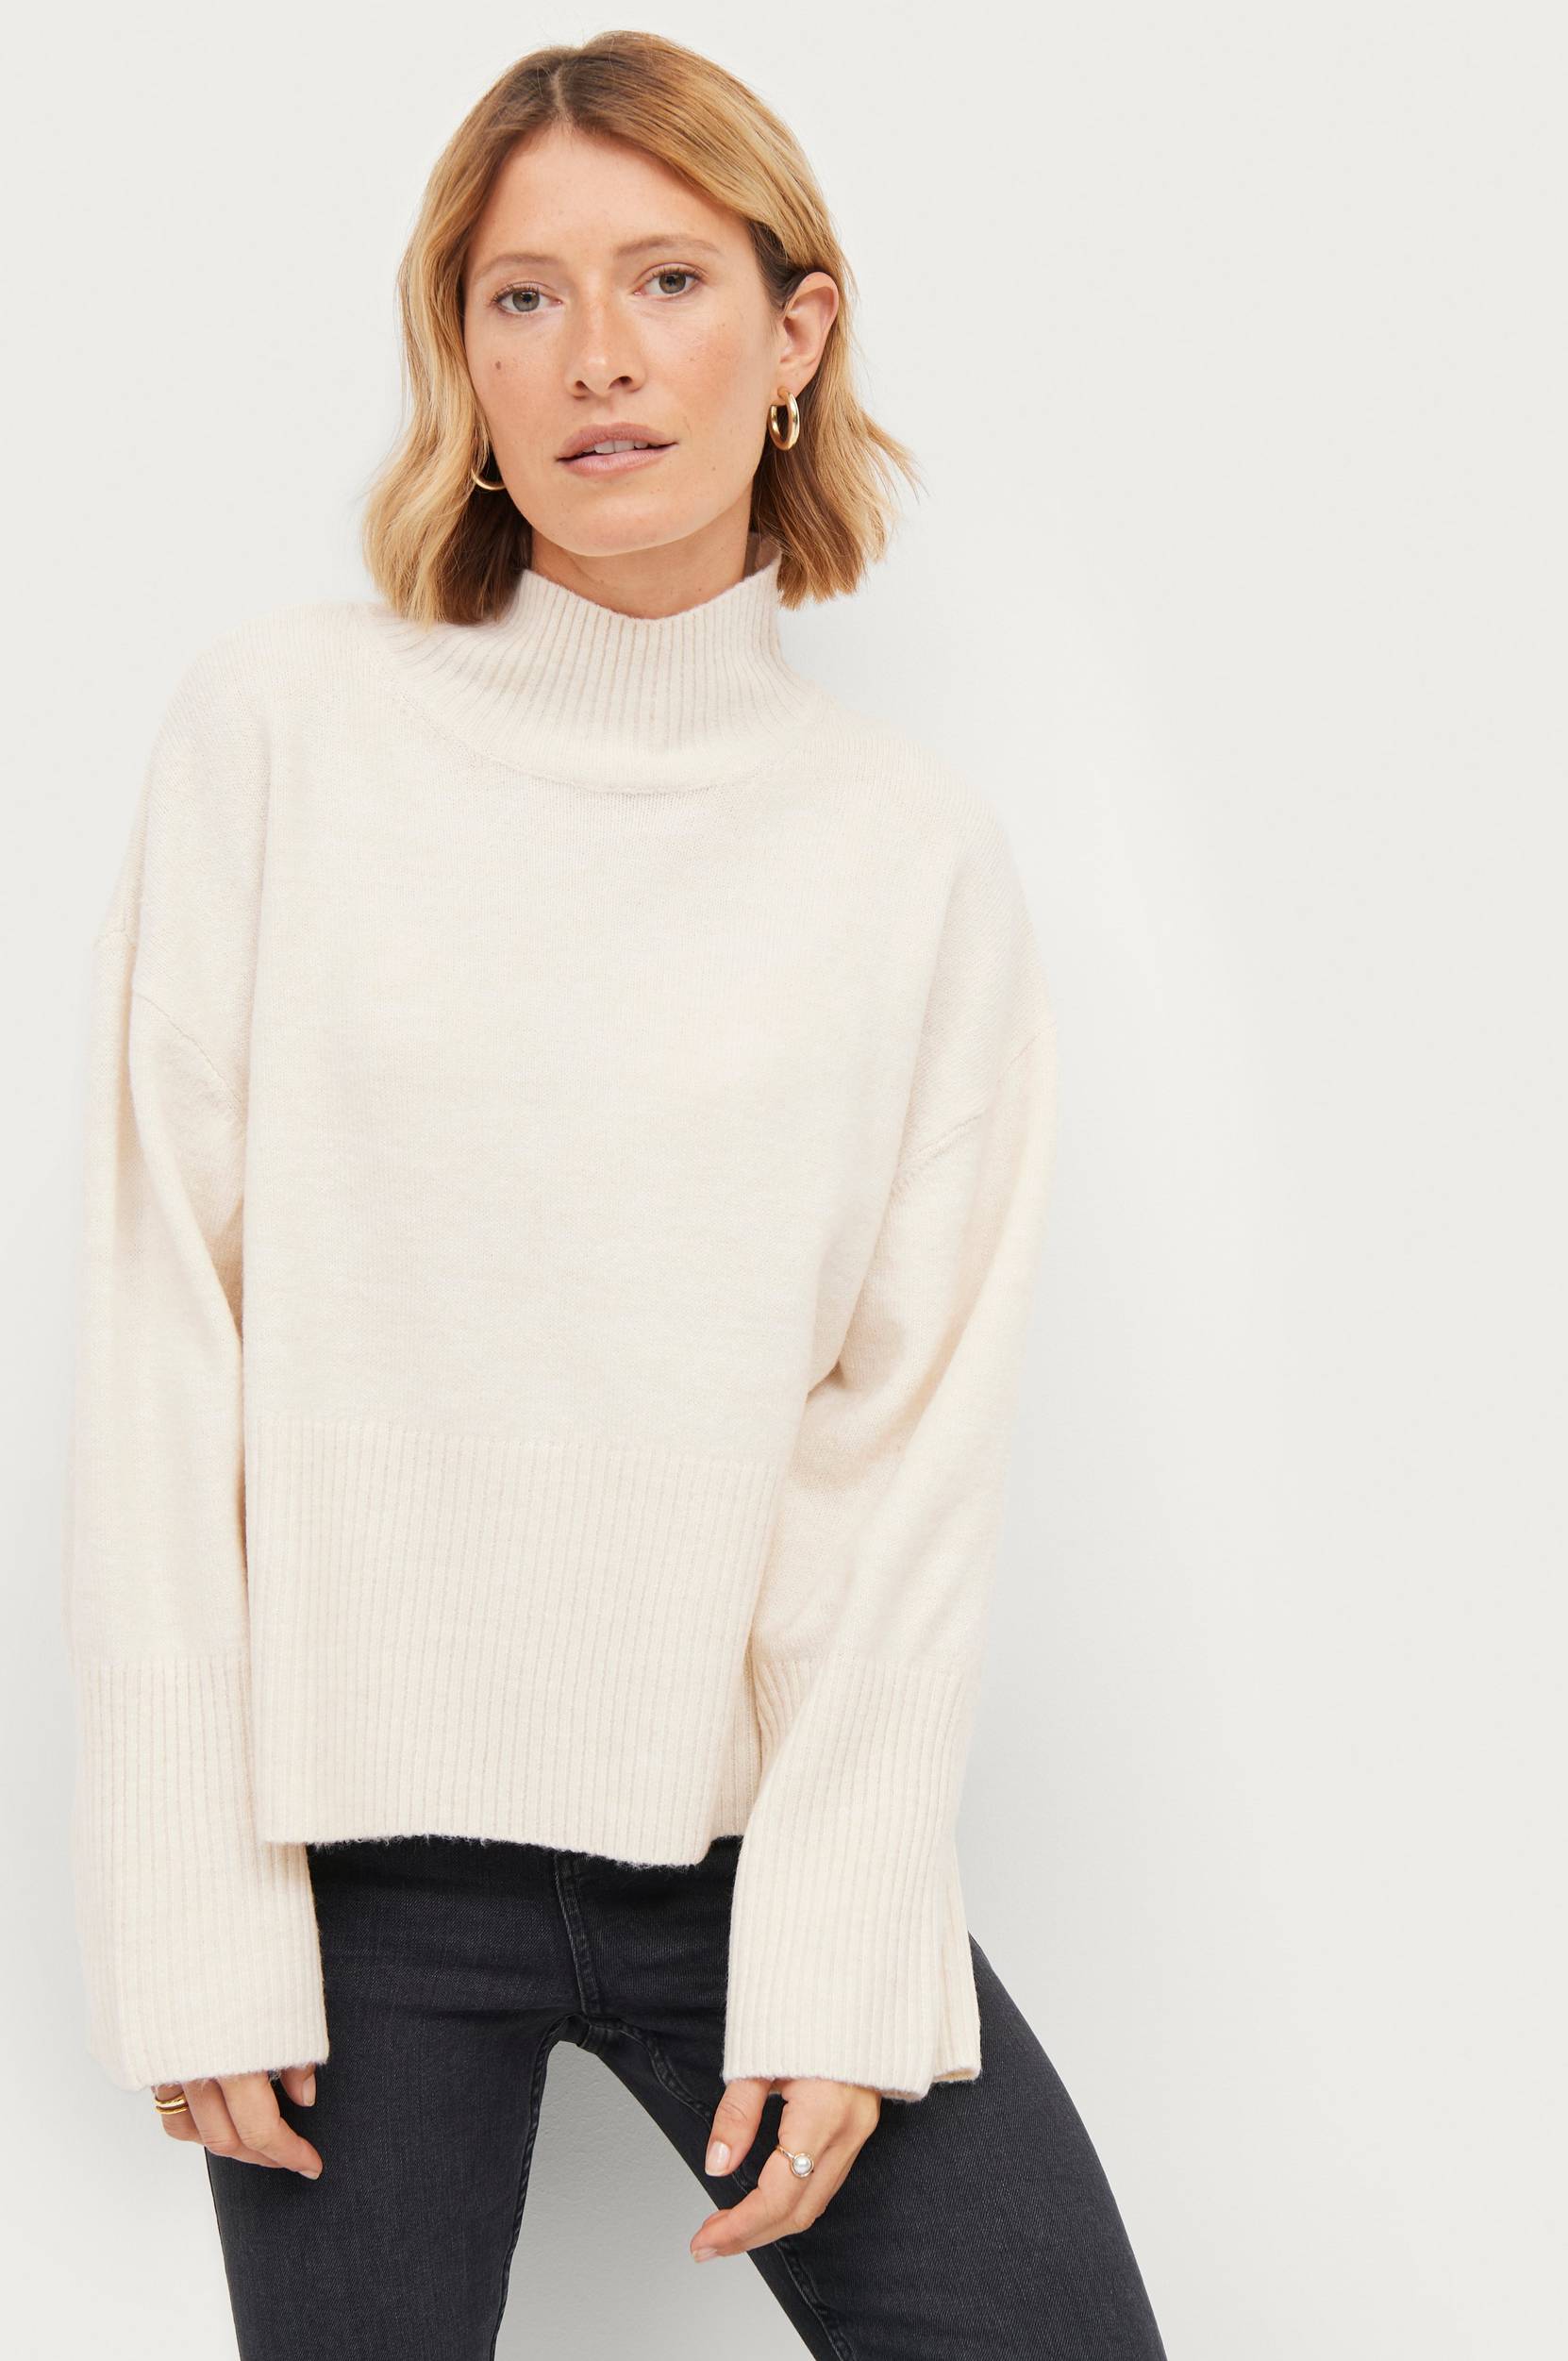 Gina Tricot - Trøje Lova Knitted Sweater - Hvid - 36/38